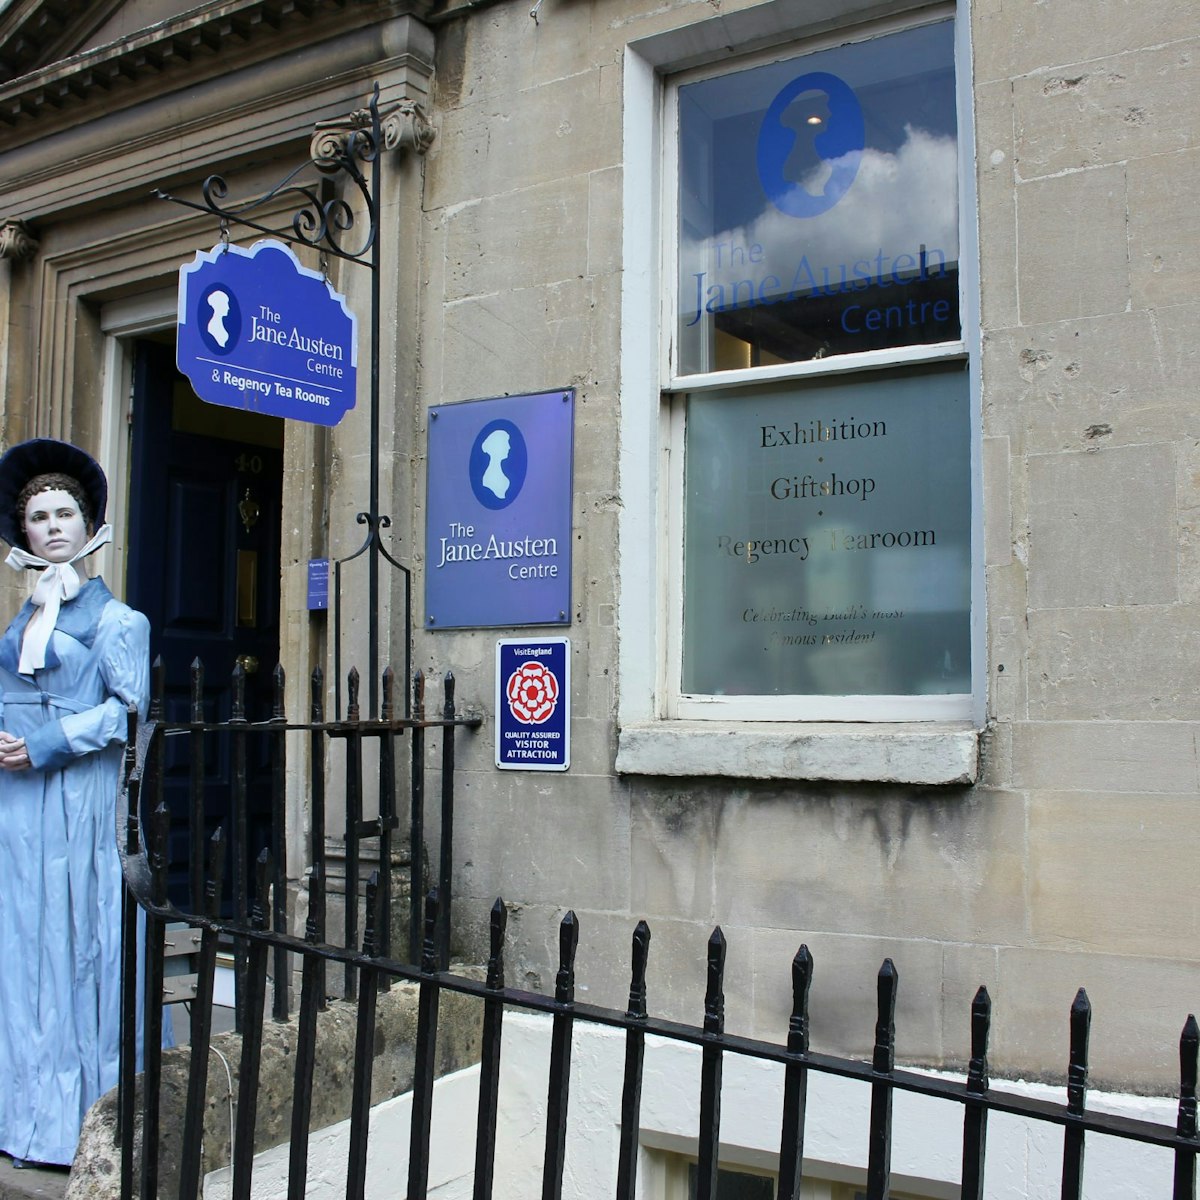 Outside the Jane Austen Centre